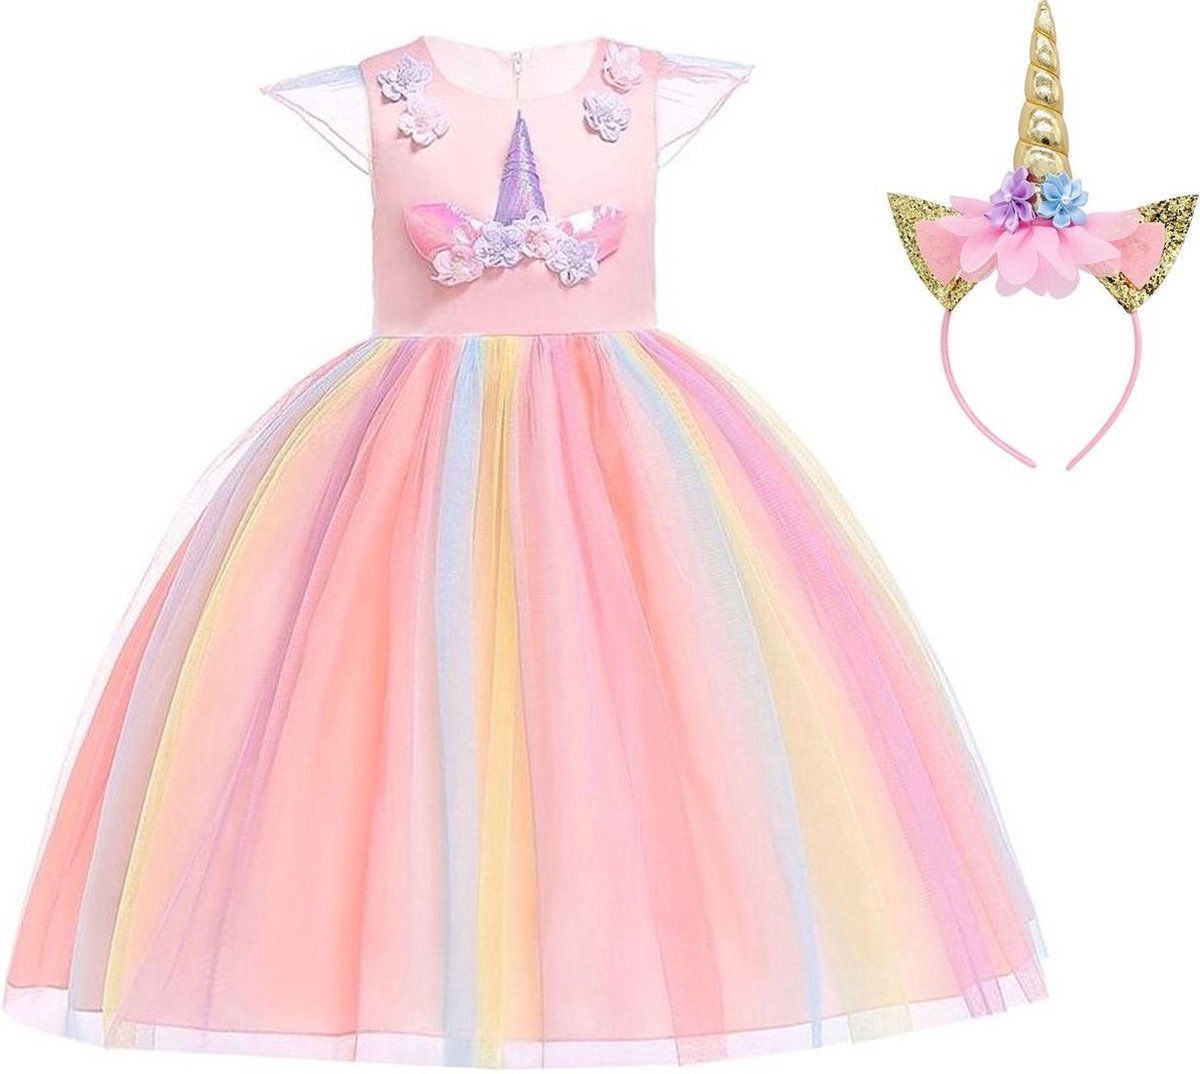 URBANKR8 - Eenhoorn jurk unicorn jurk - carnavalskleding- carnaval -eenhoorn kostuum - roze Classic 110 prinsessen jurk verkleedjurk met haarband en unicorn ketting